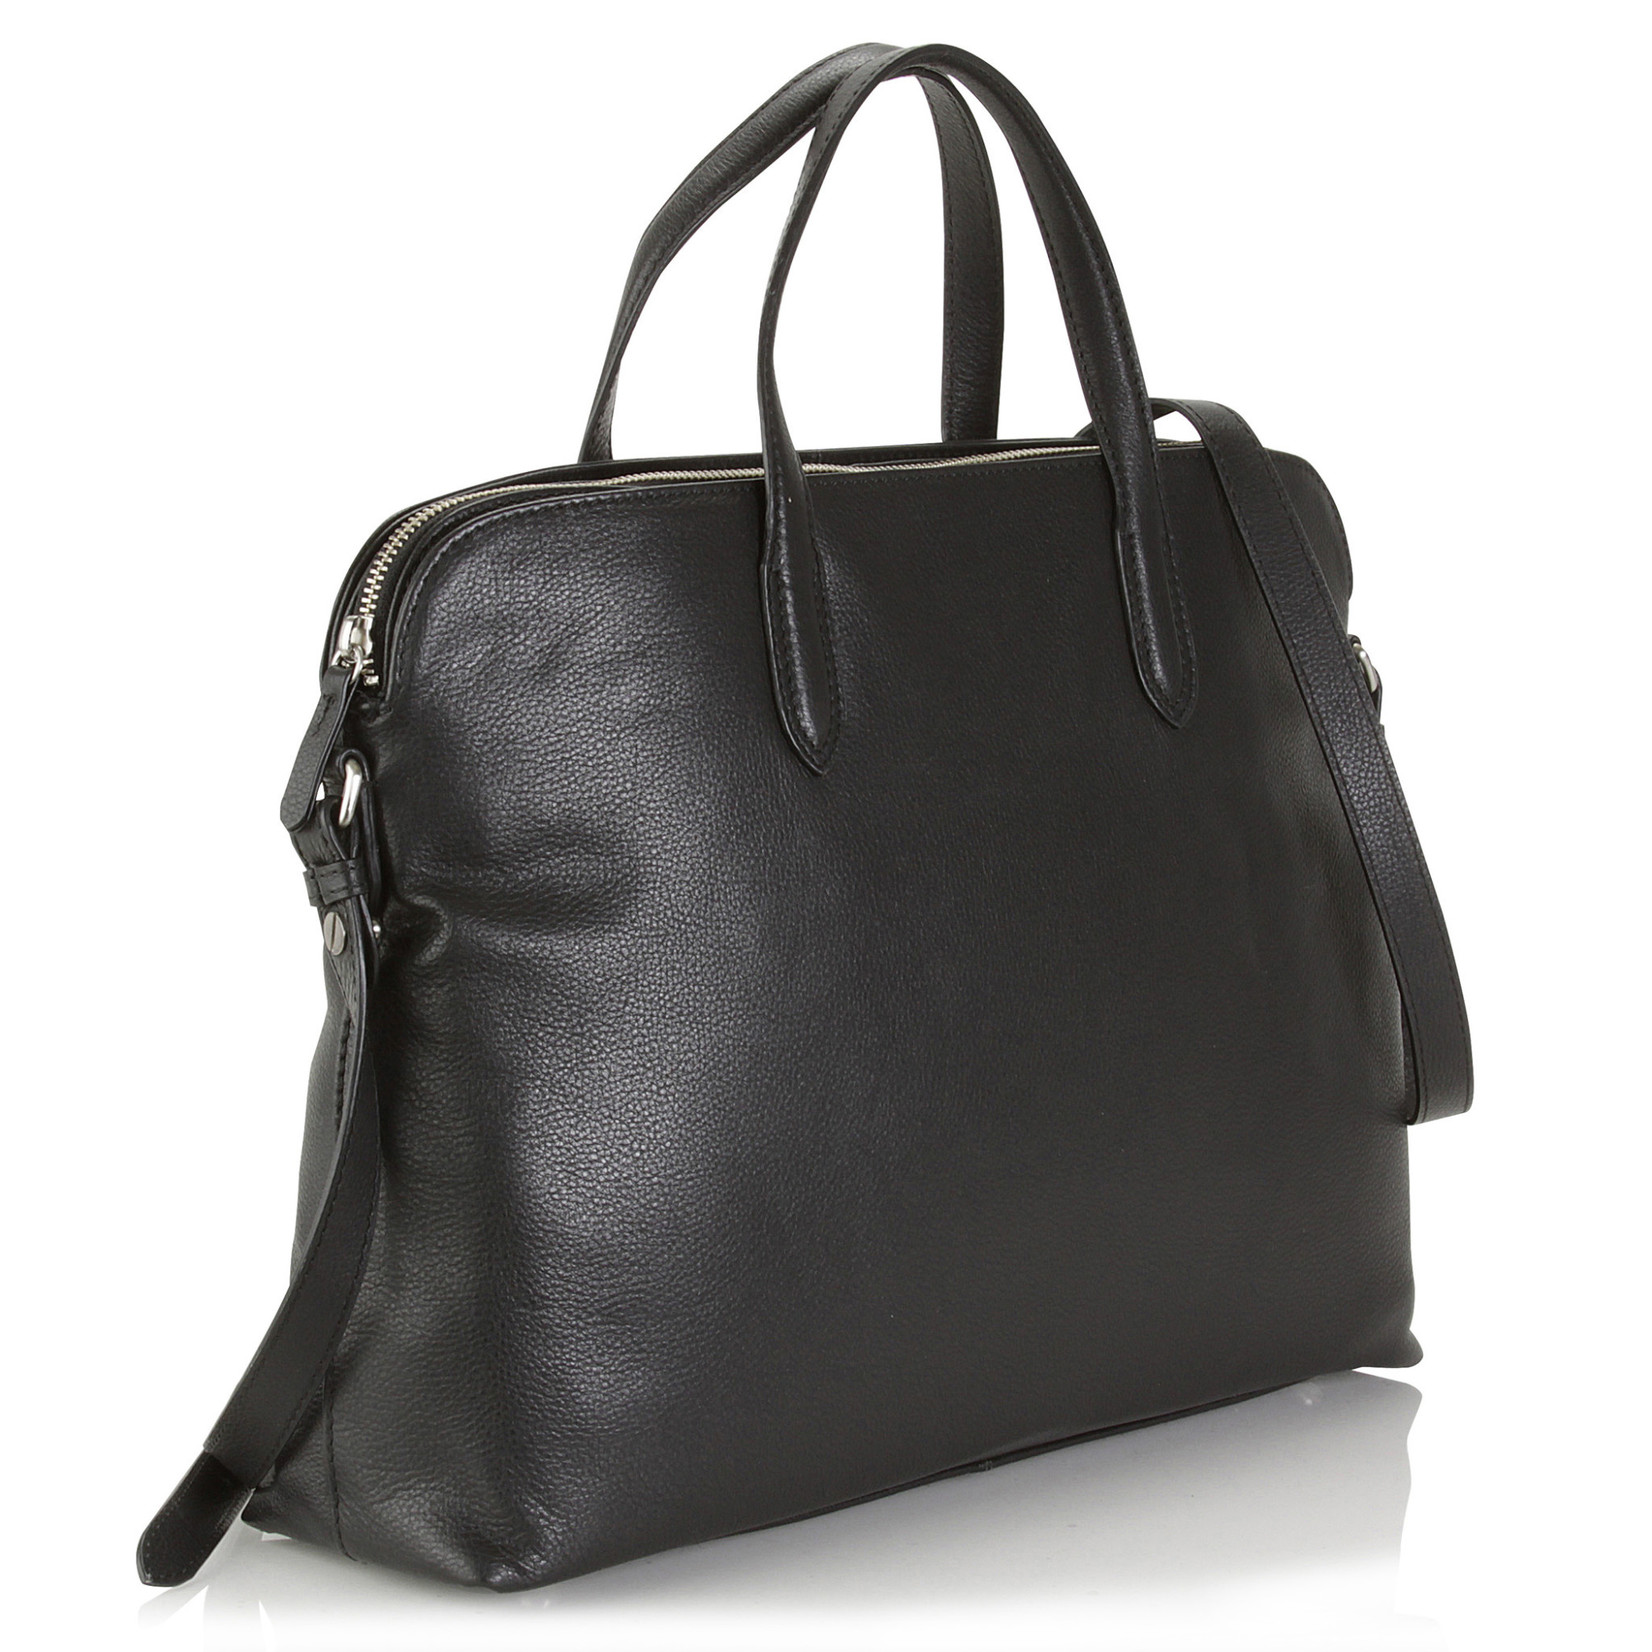 Work Bag - Black Leather